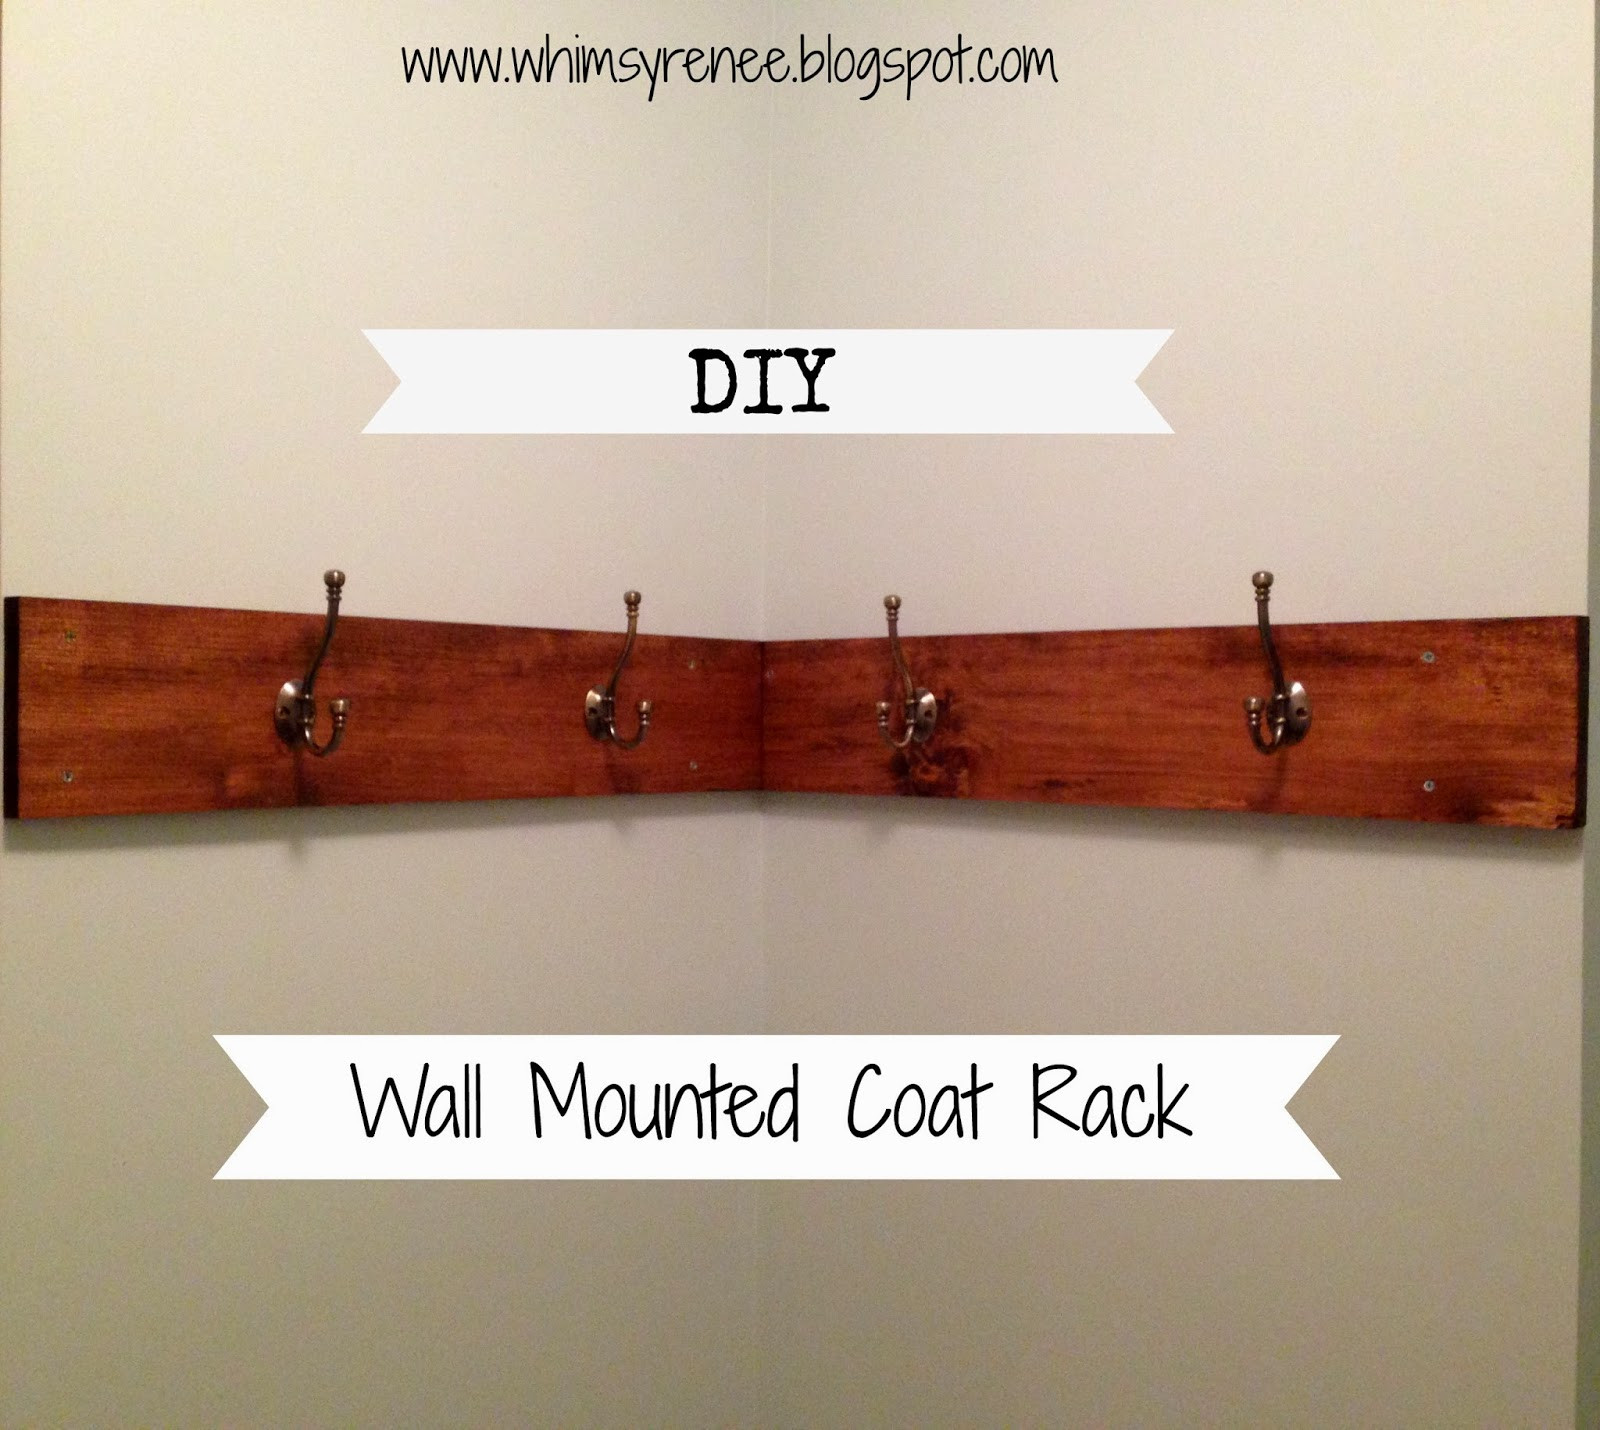 DIY Wall Mounted Coat Rack With Shelf
 Whimsy Renee DIY Wall Mounted Coat Rack